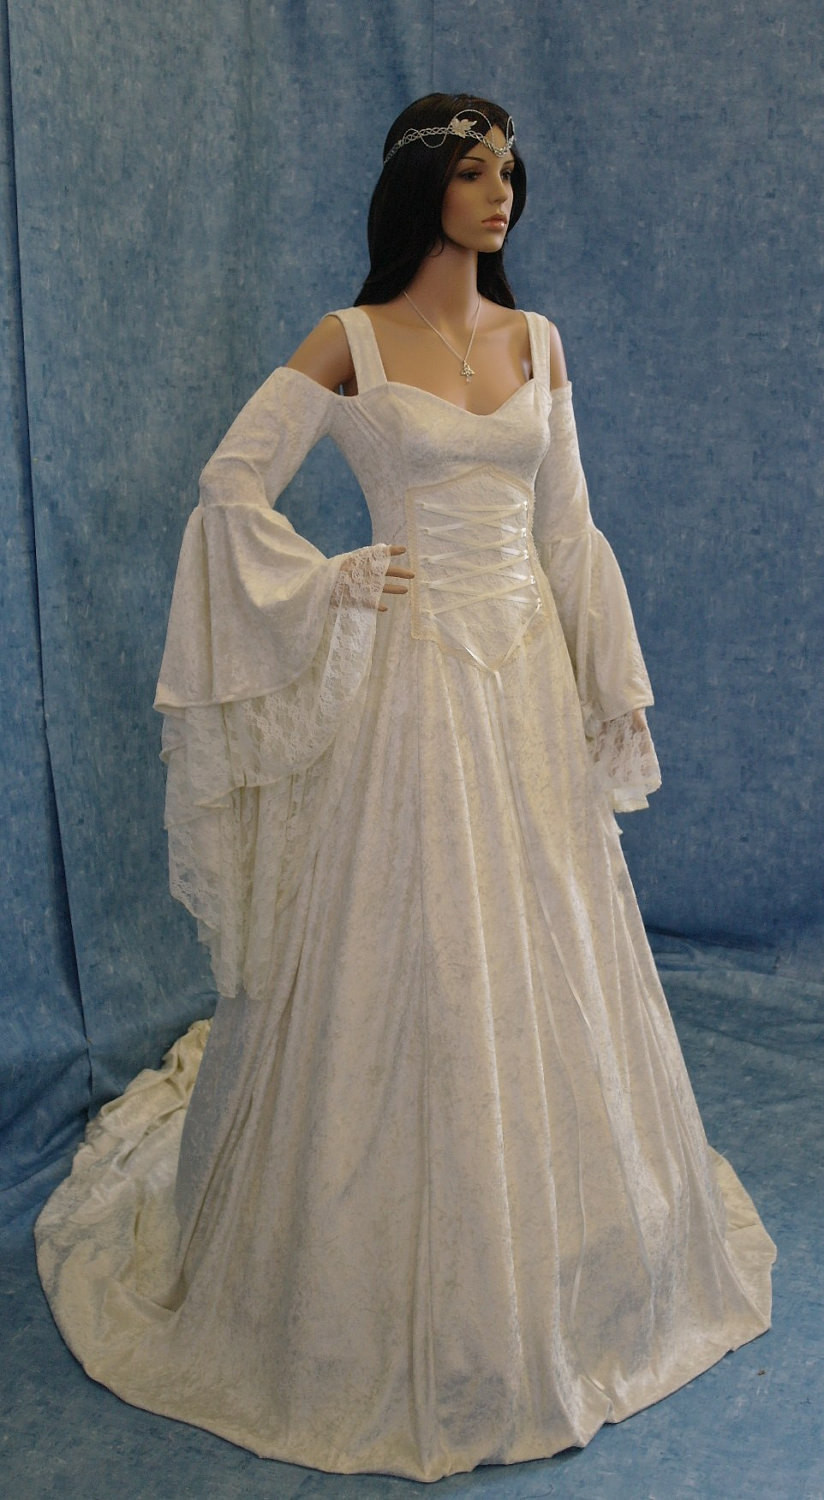 Medieval Wedding Dresses
 Renaissance dress me val dress handfasting by